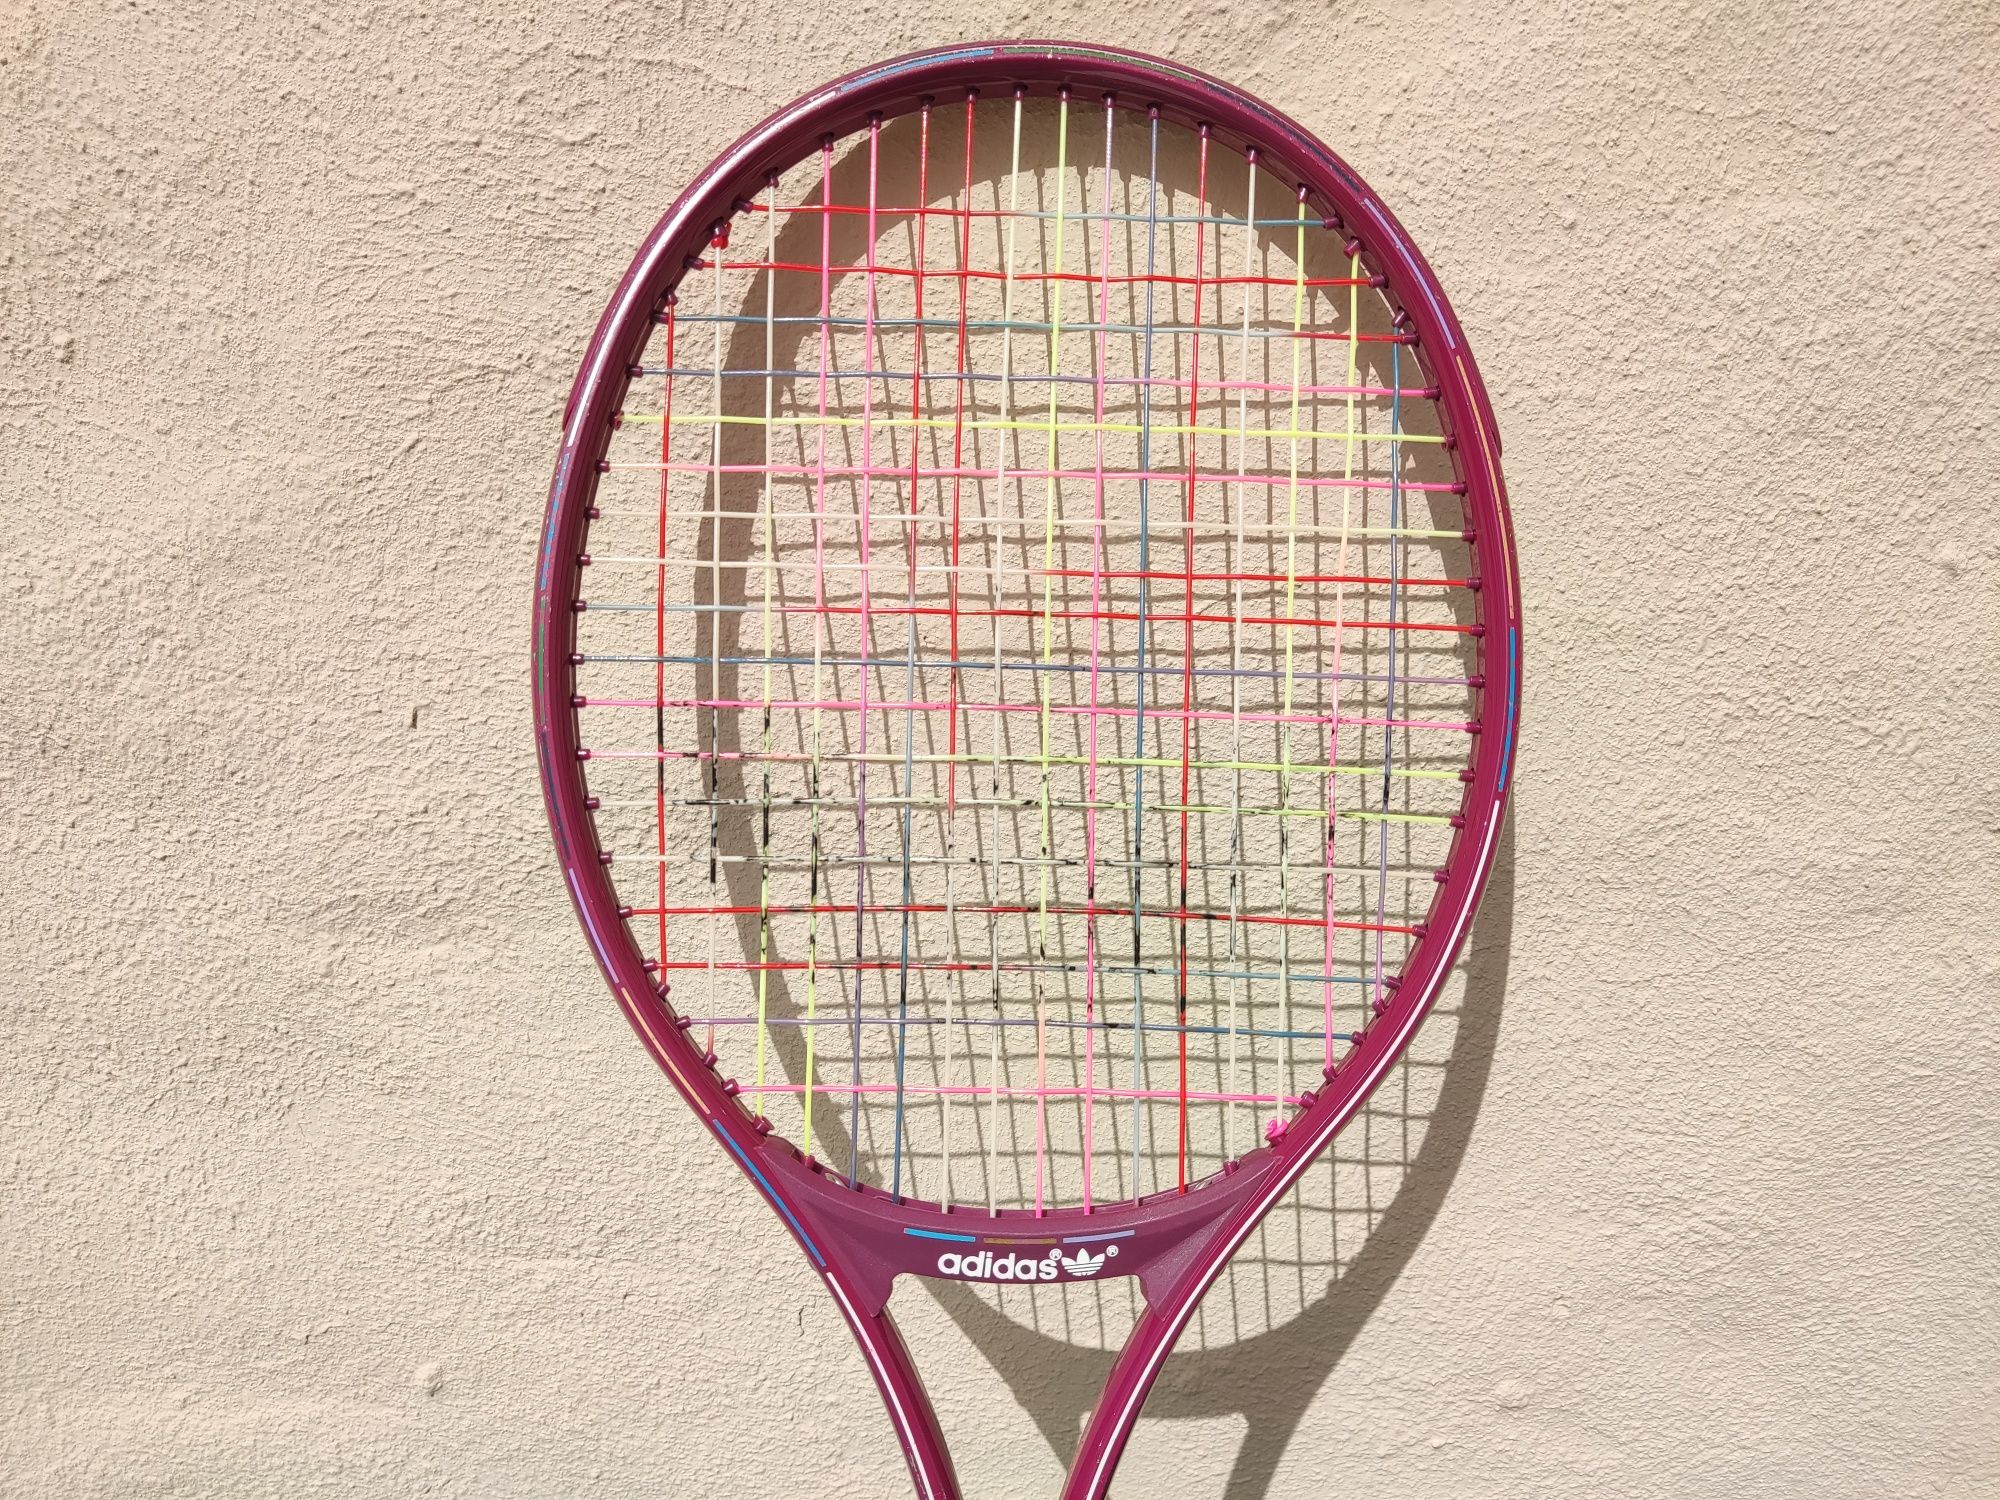 Raquete de ténis antiga Adidas pink (cor de rosa) vintage